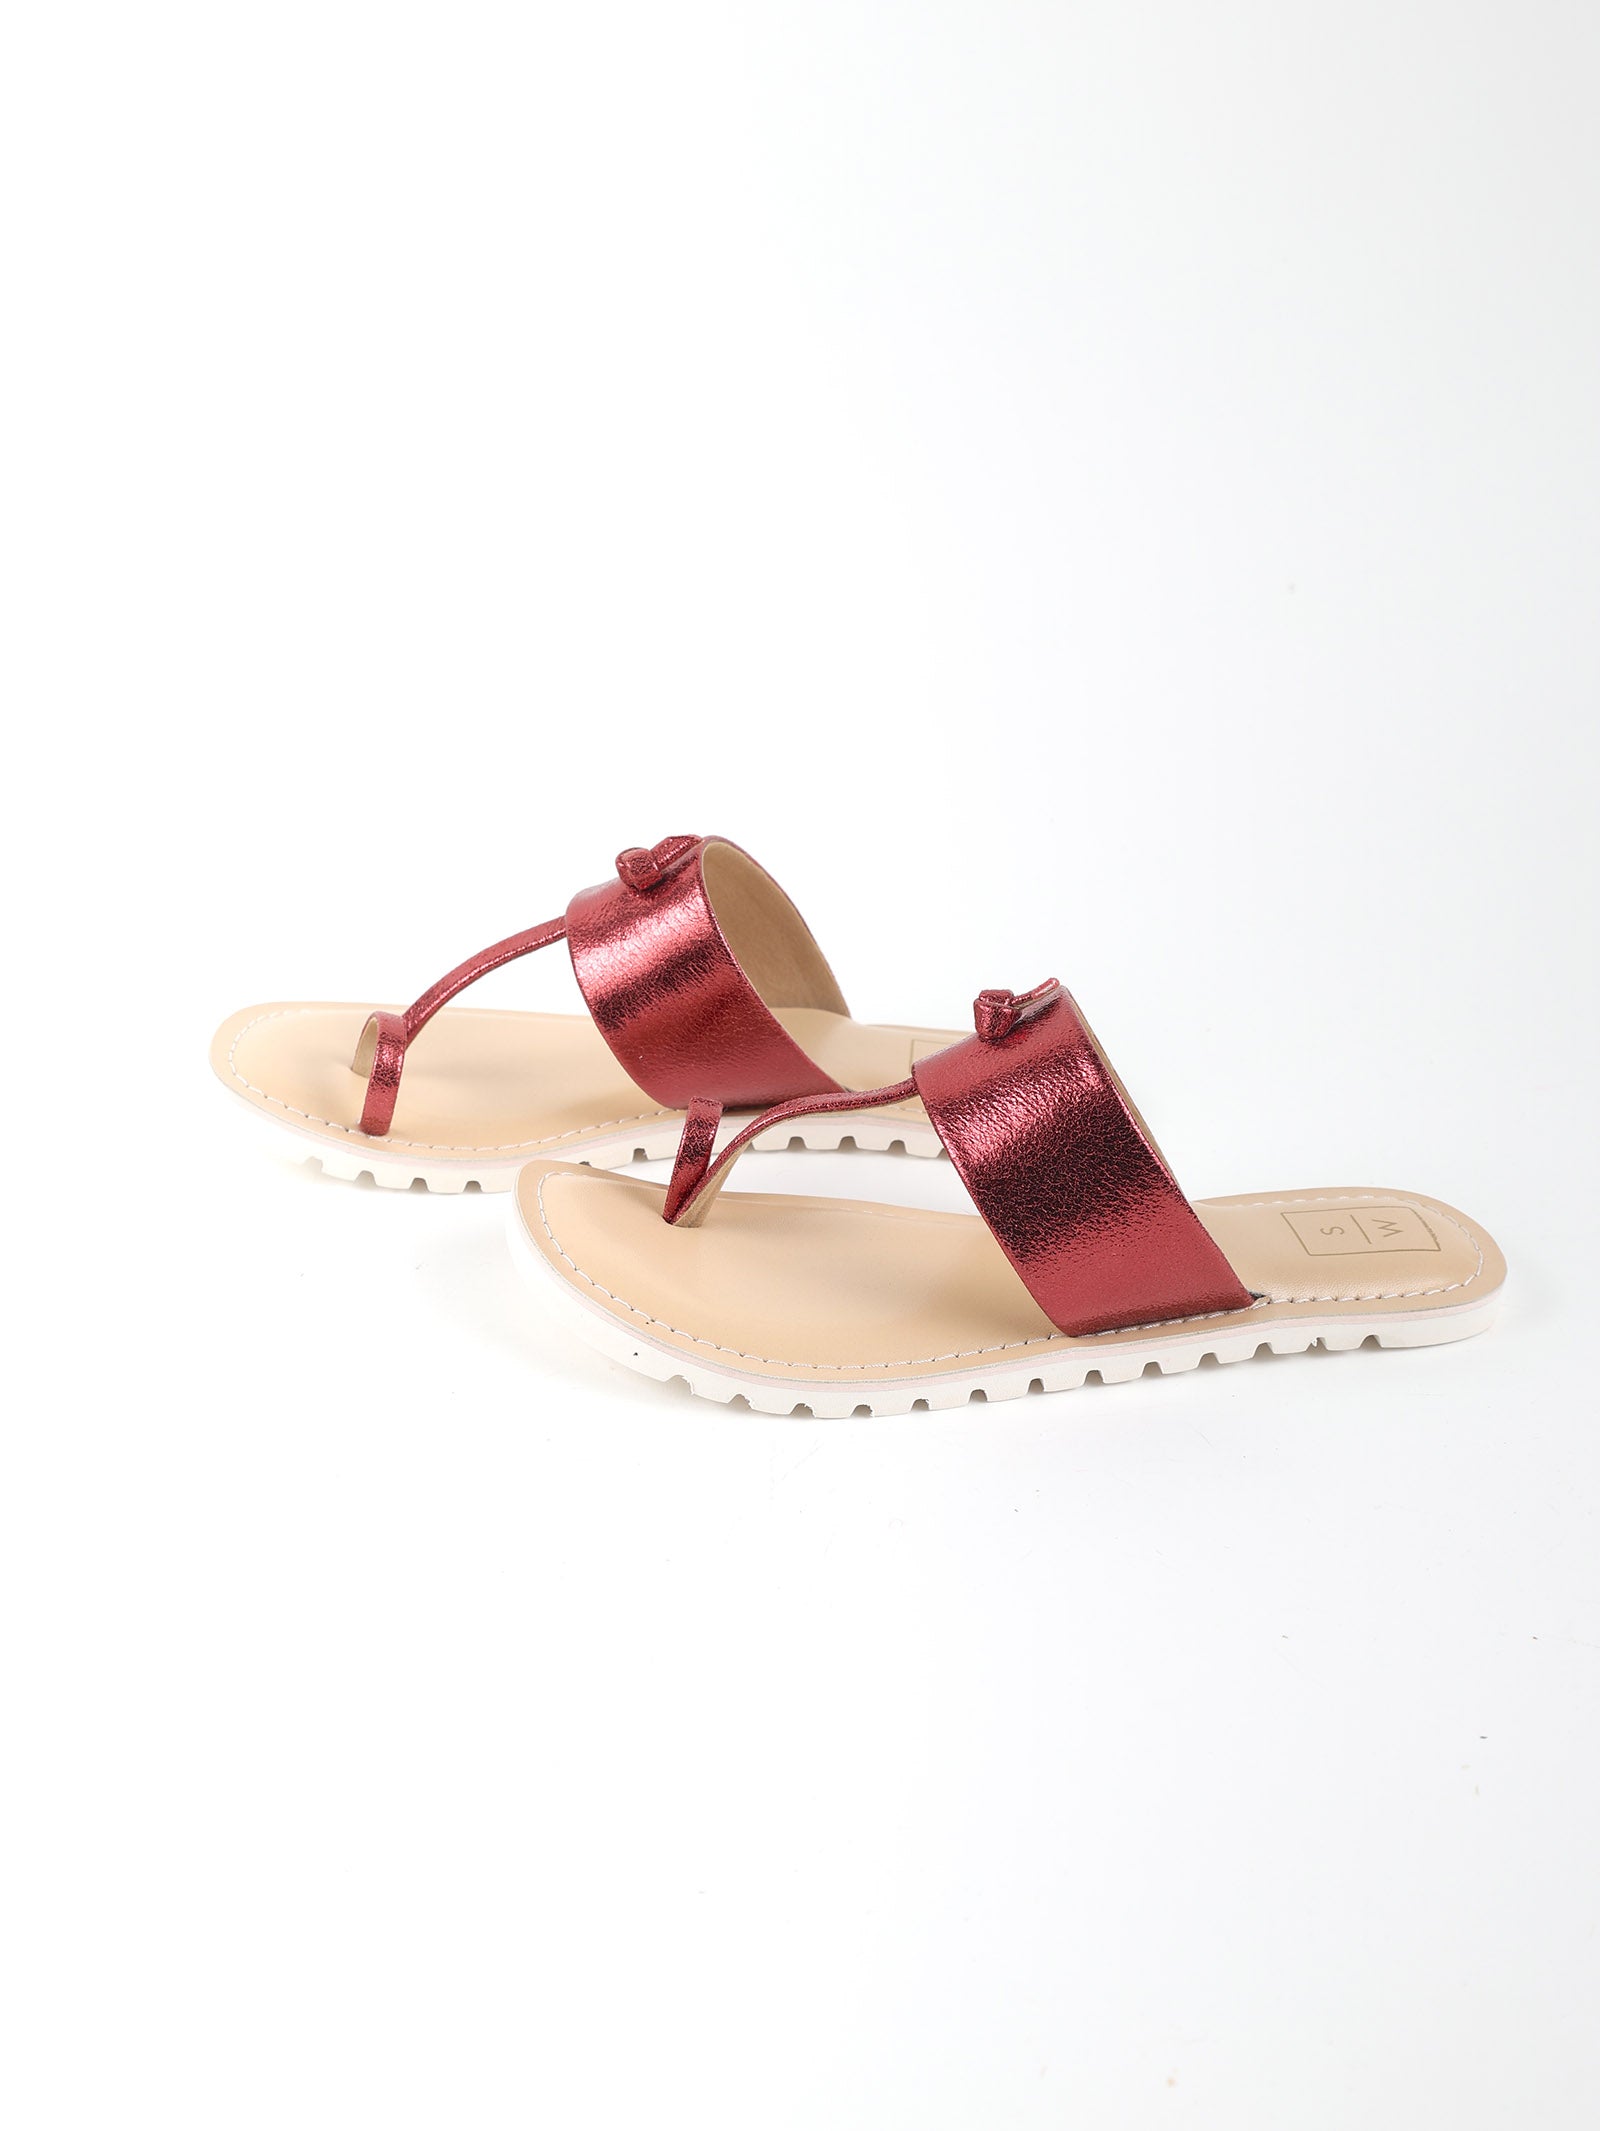 Lalli Red Metallic Flatform Sandals